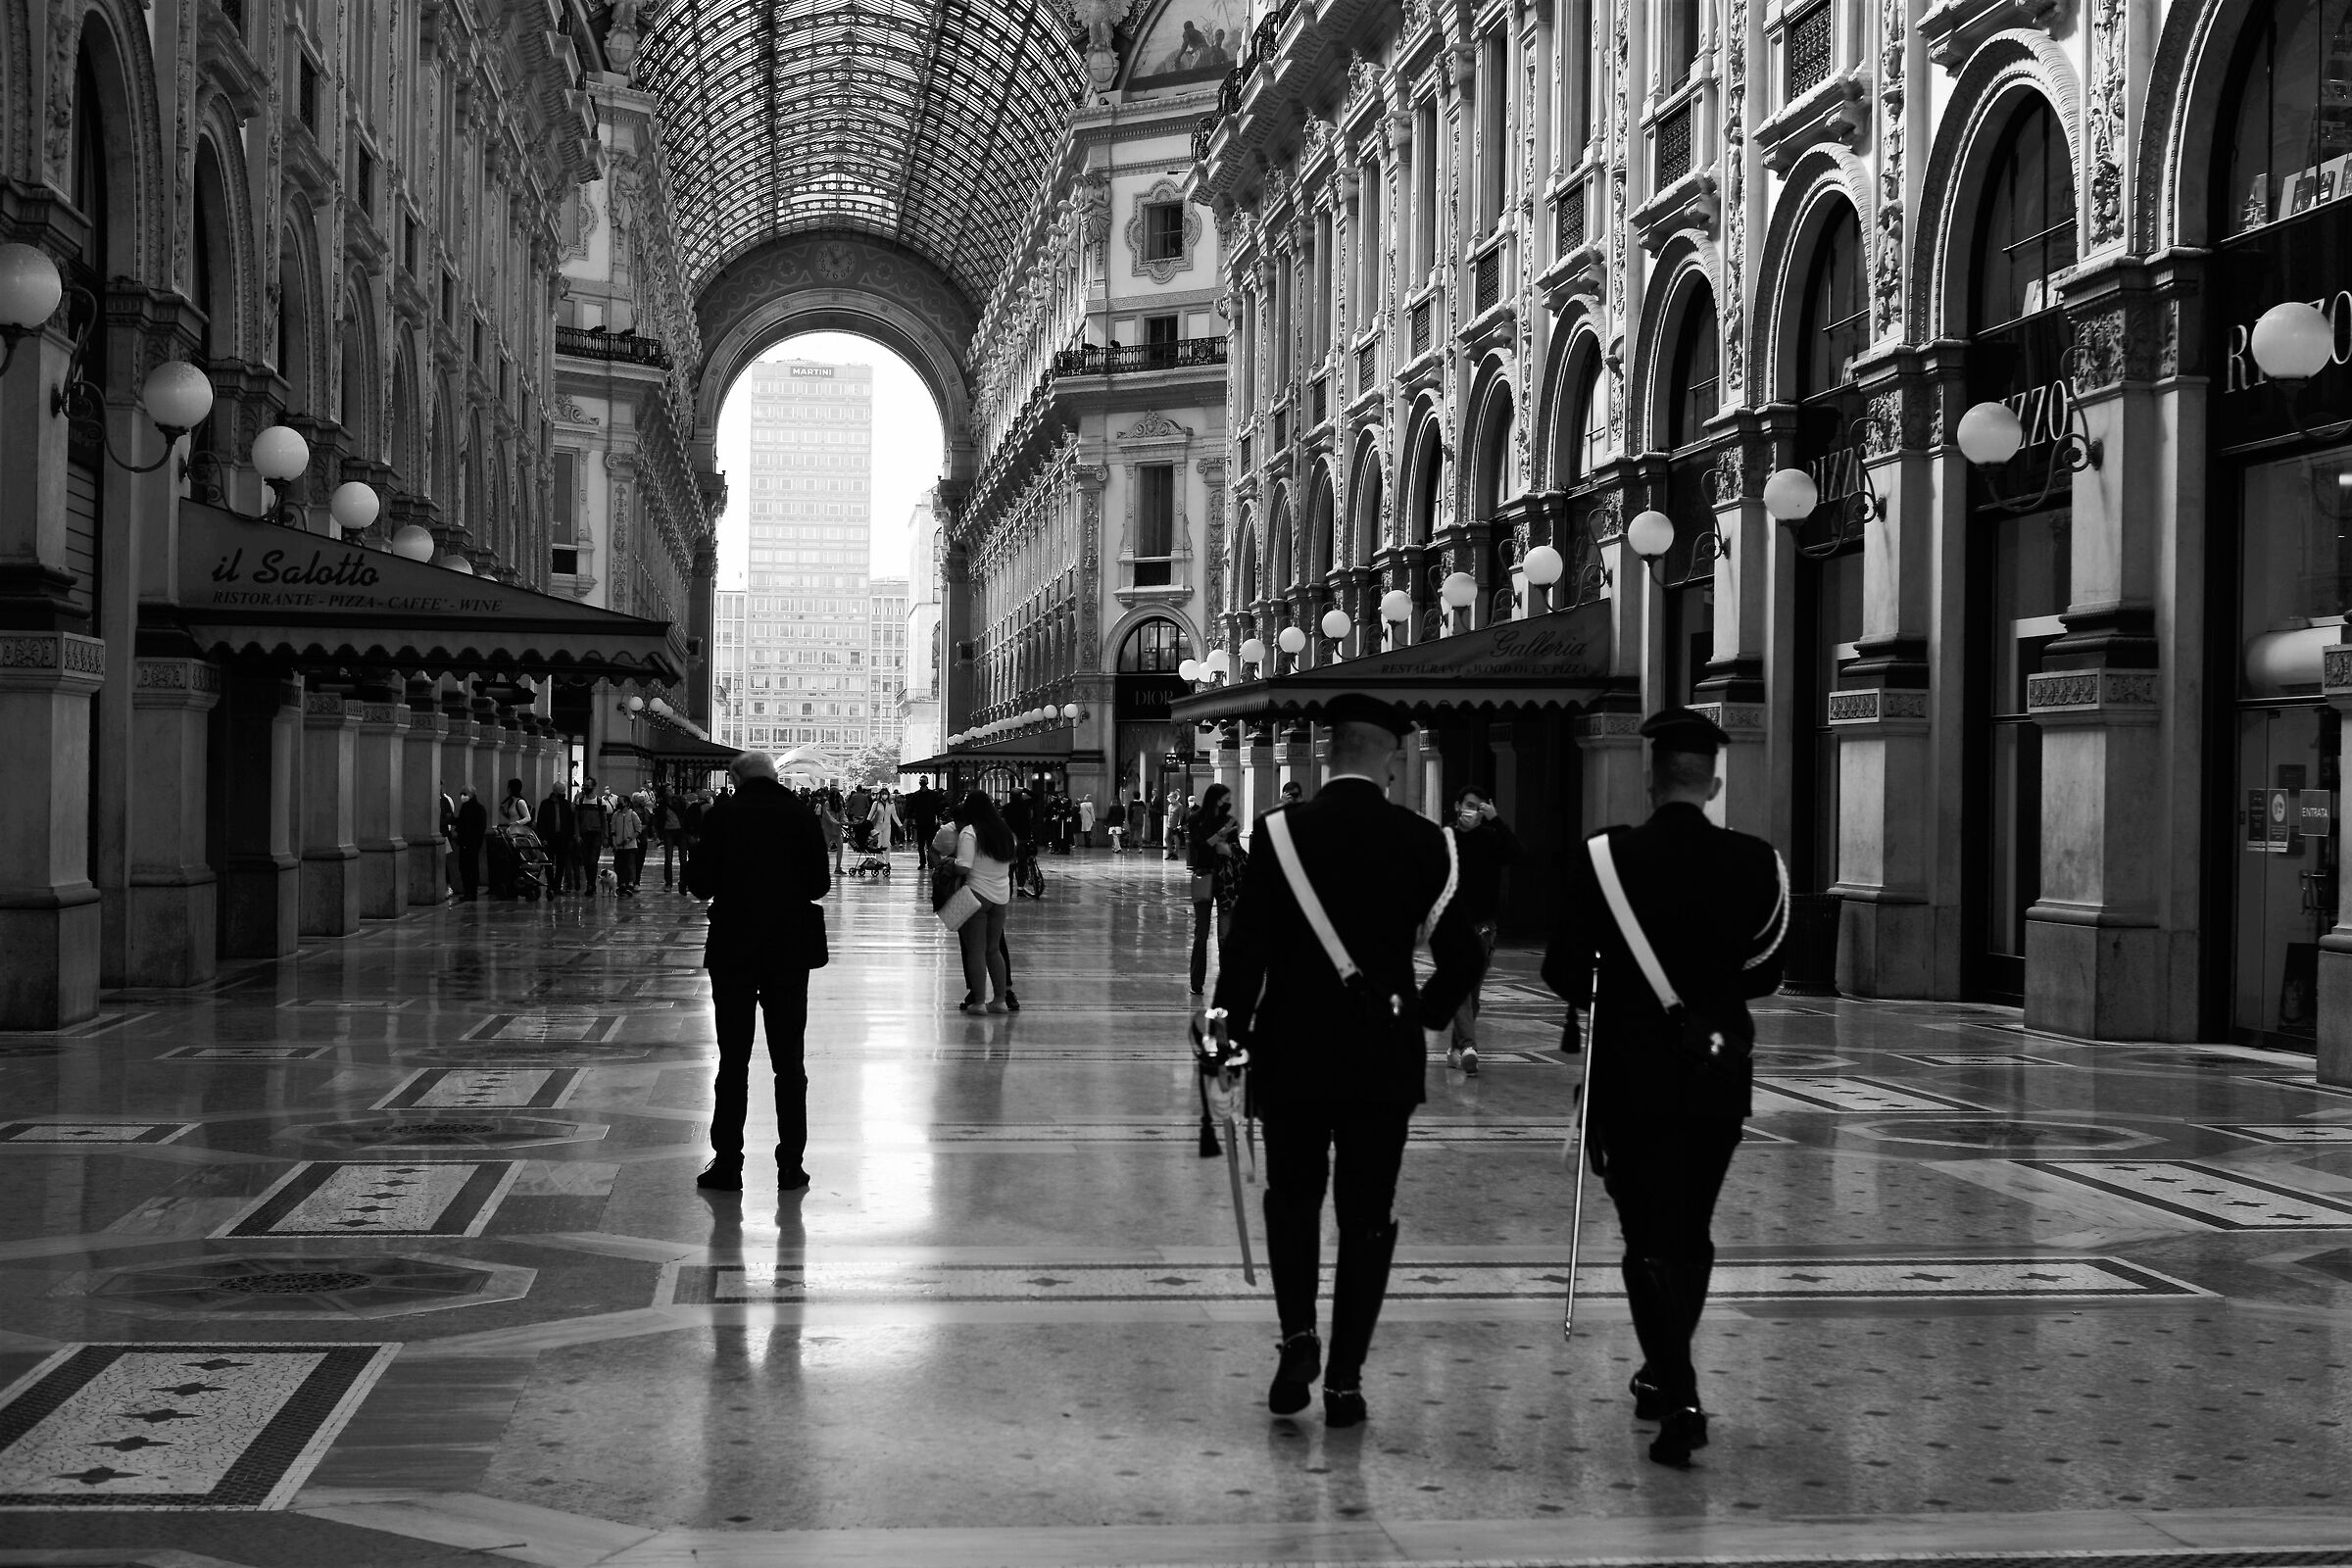 Carabinieri in the Gallery...